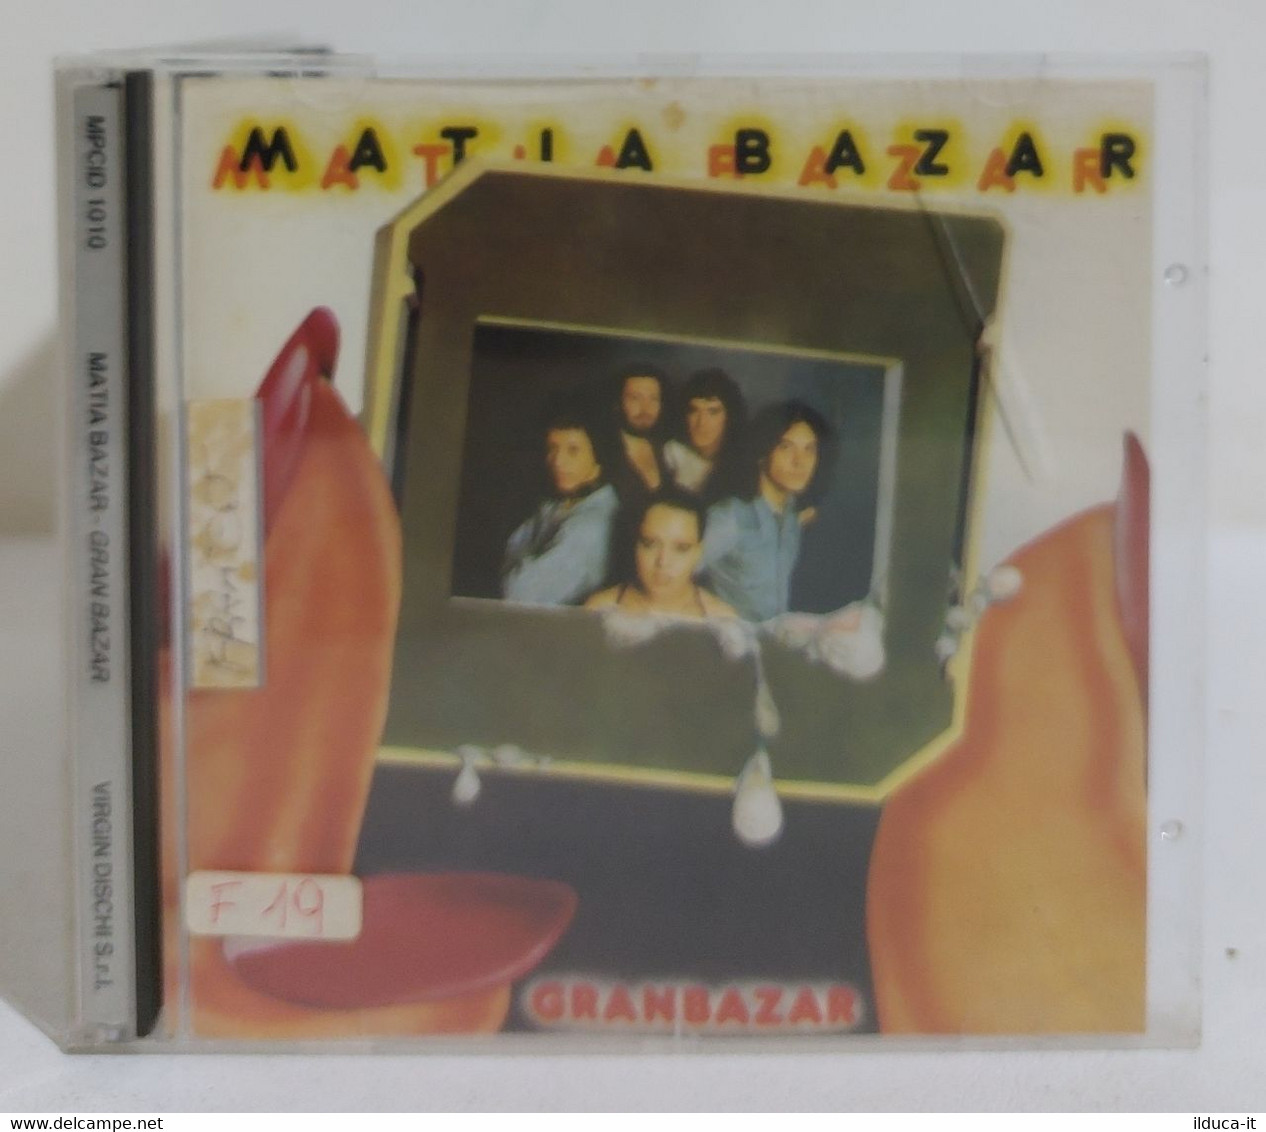 I107650 CD - Matia Bazar - Granbazar - Virgin 1991 - Autres - Musique Italienne